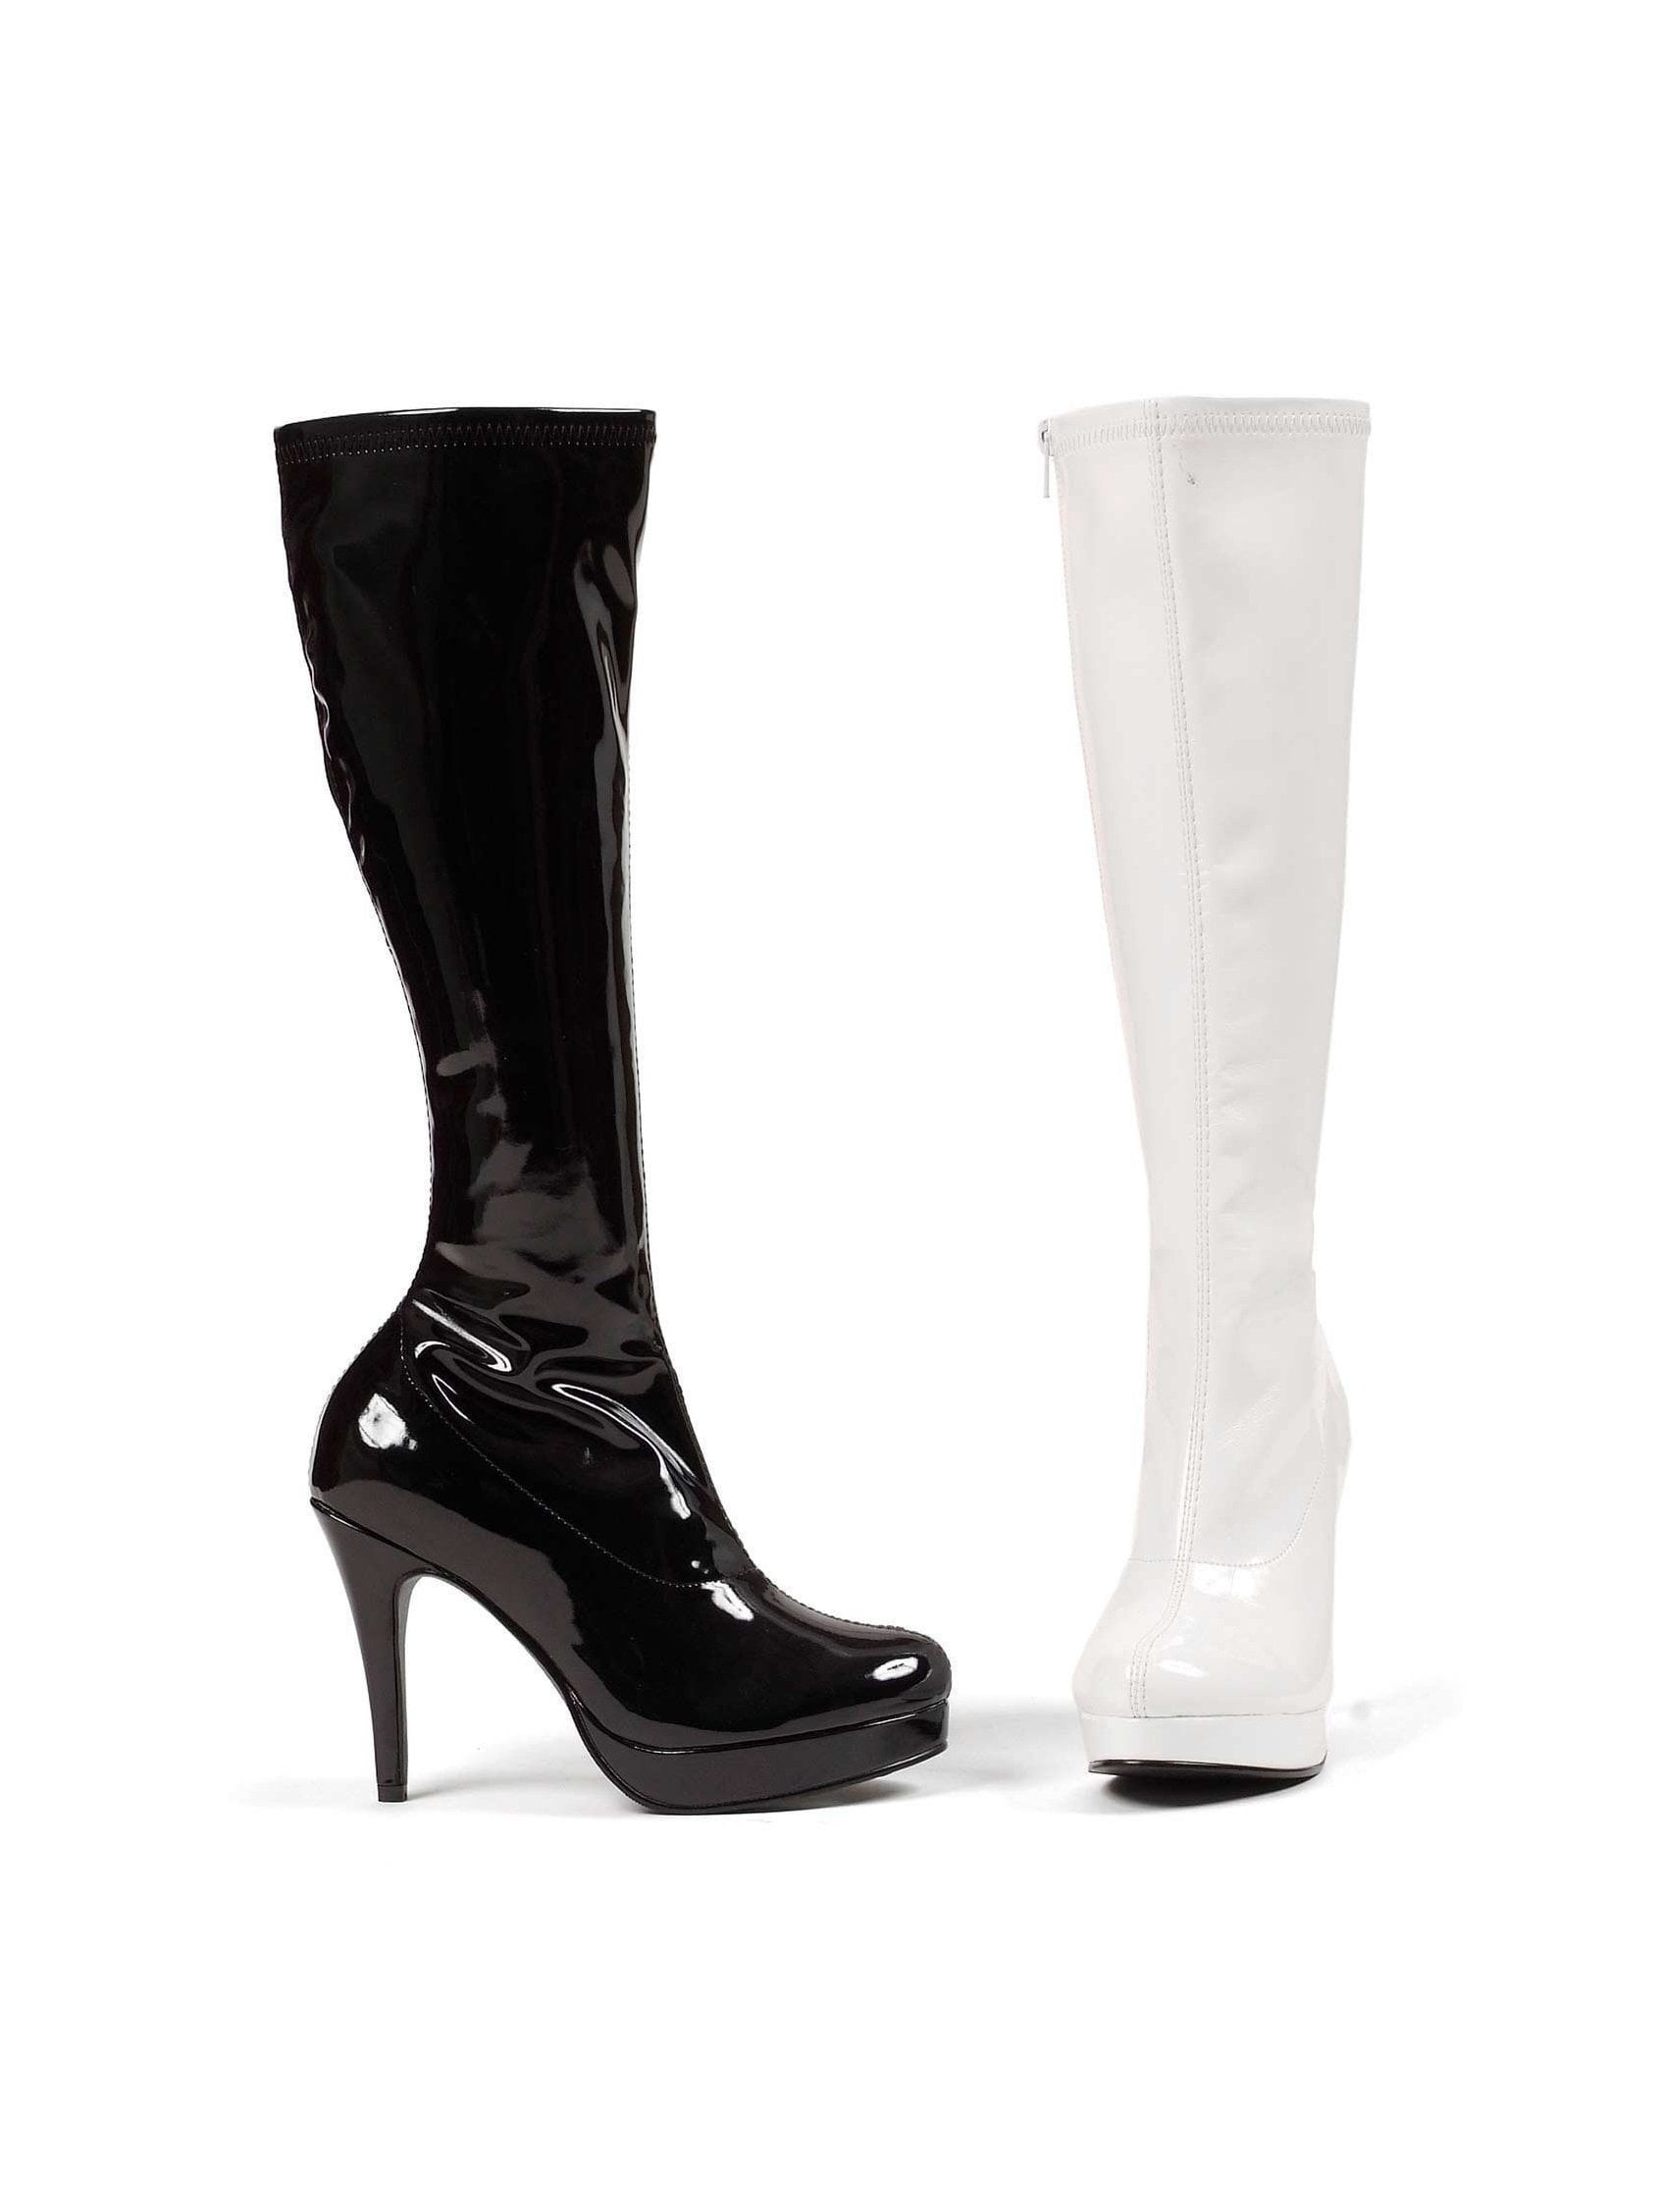 Ellie Easy White Combat Lace Up Zipper Gothic Costume Punk Boots 5" Heels Shoes